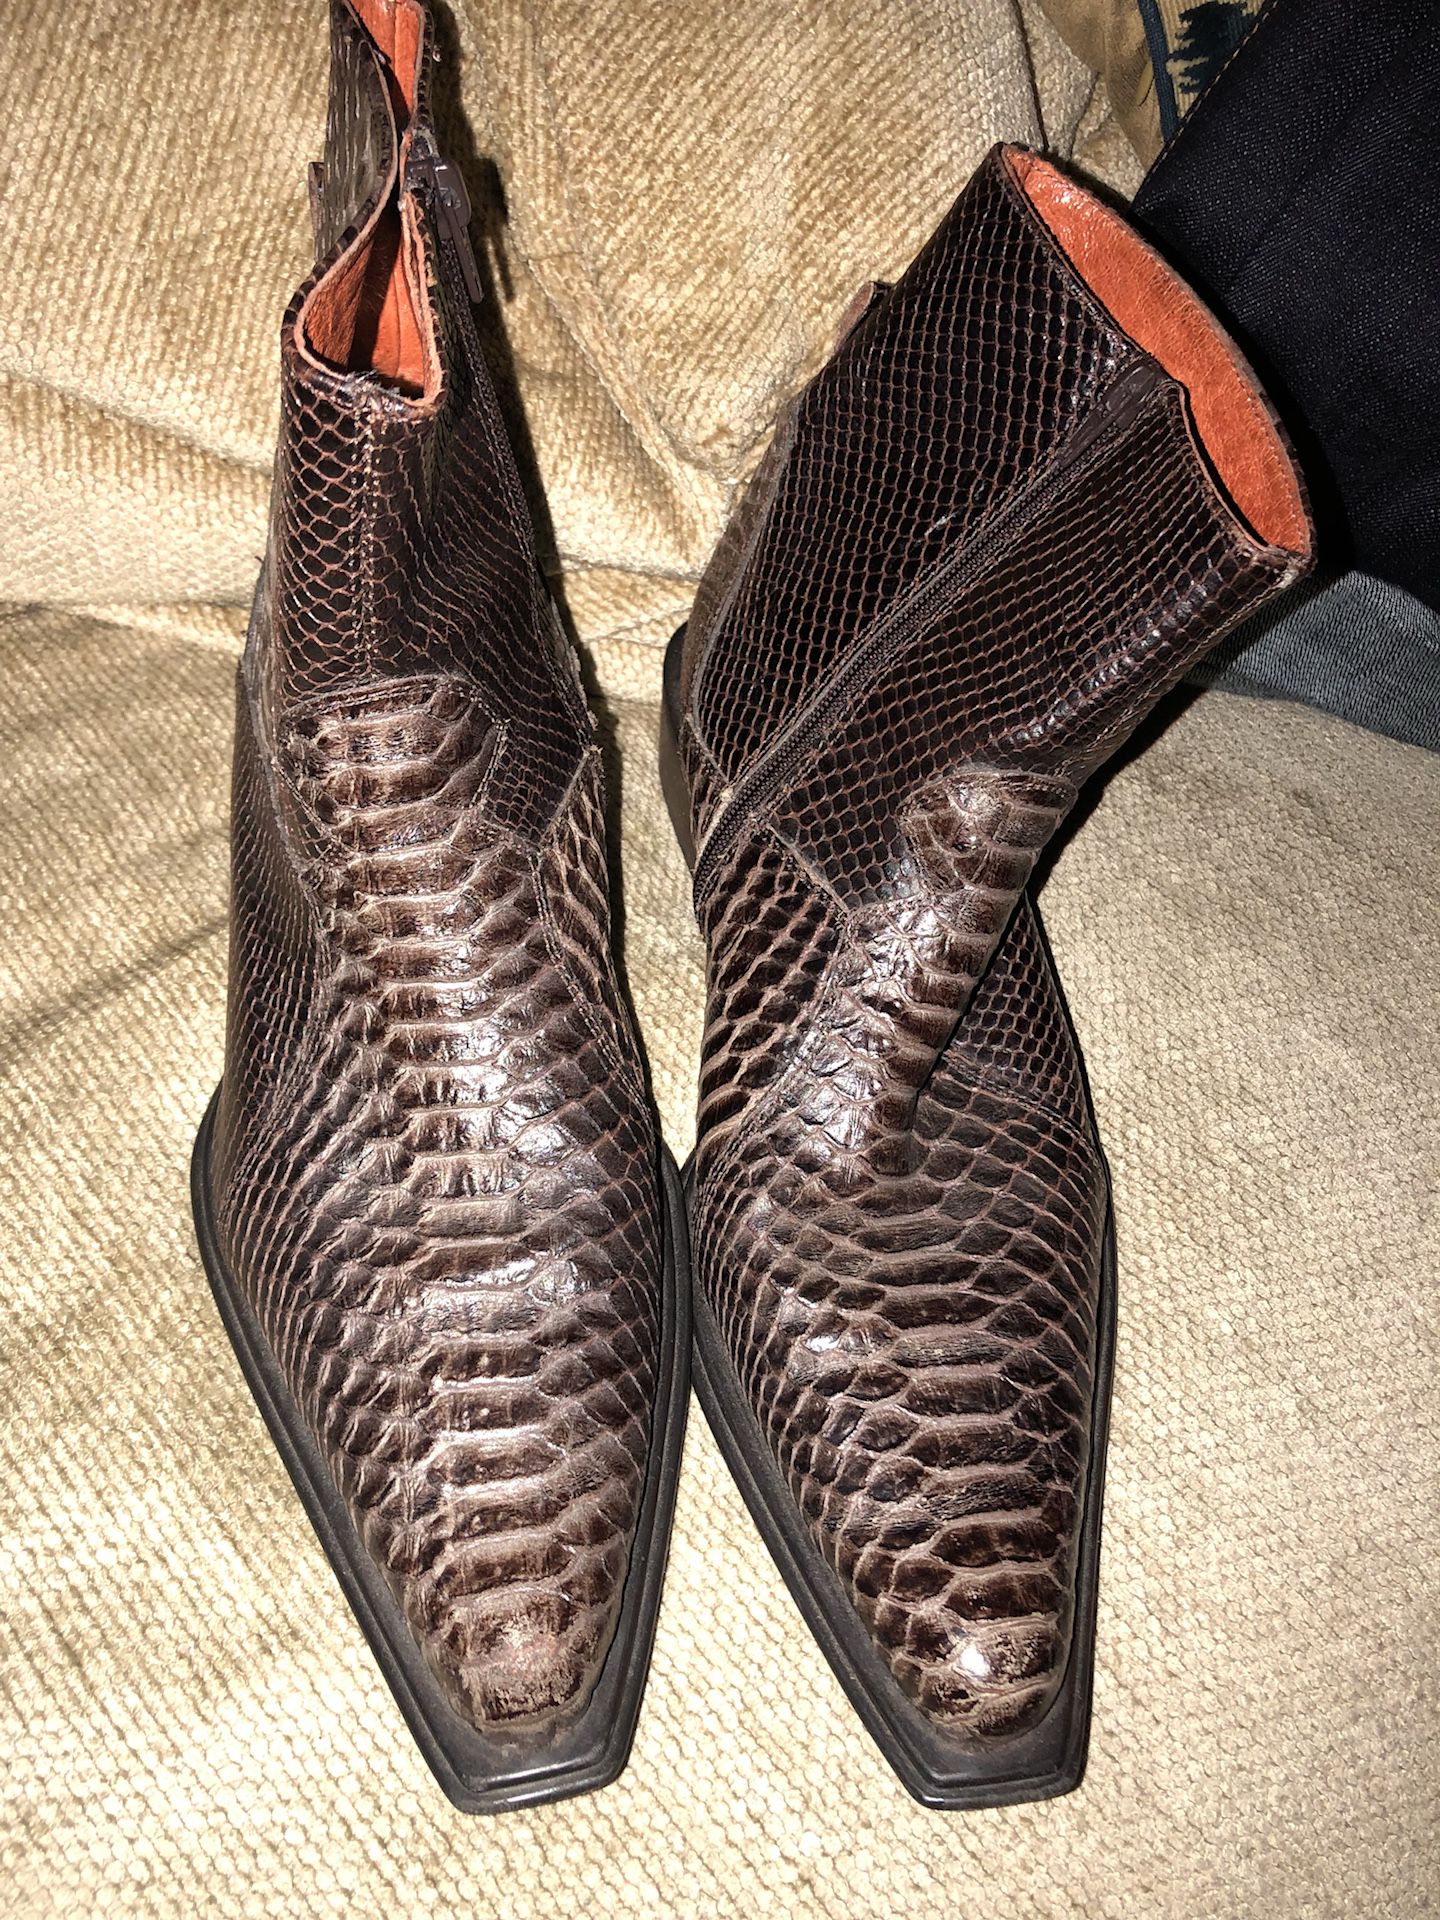 ALDO chocolate Brown lizard zip ankle cowboy boot. Size 10